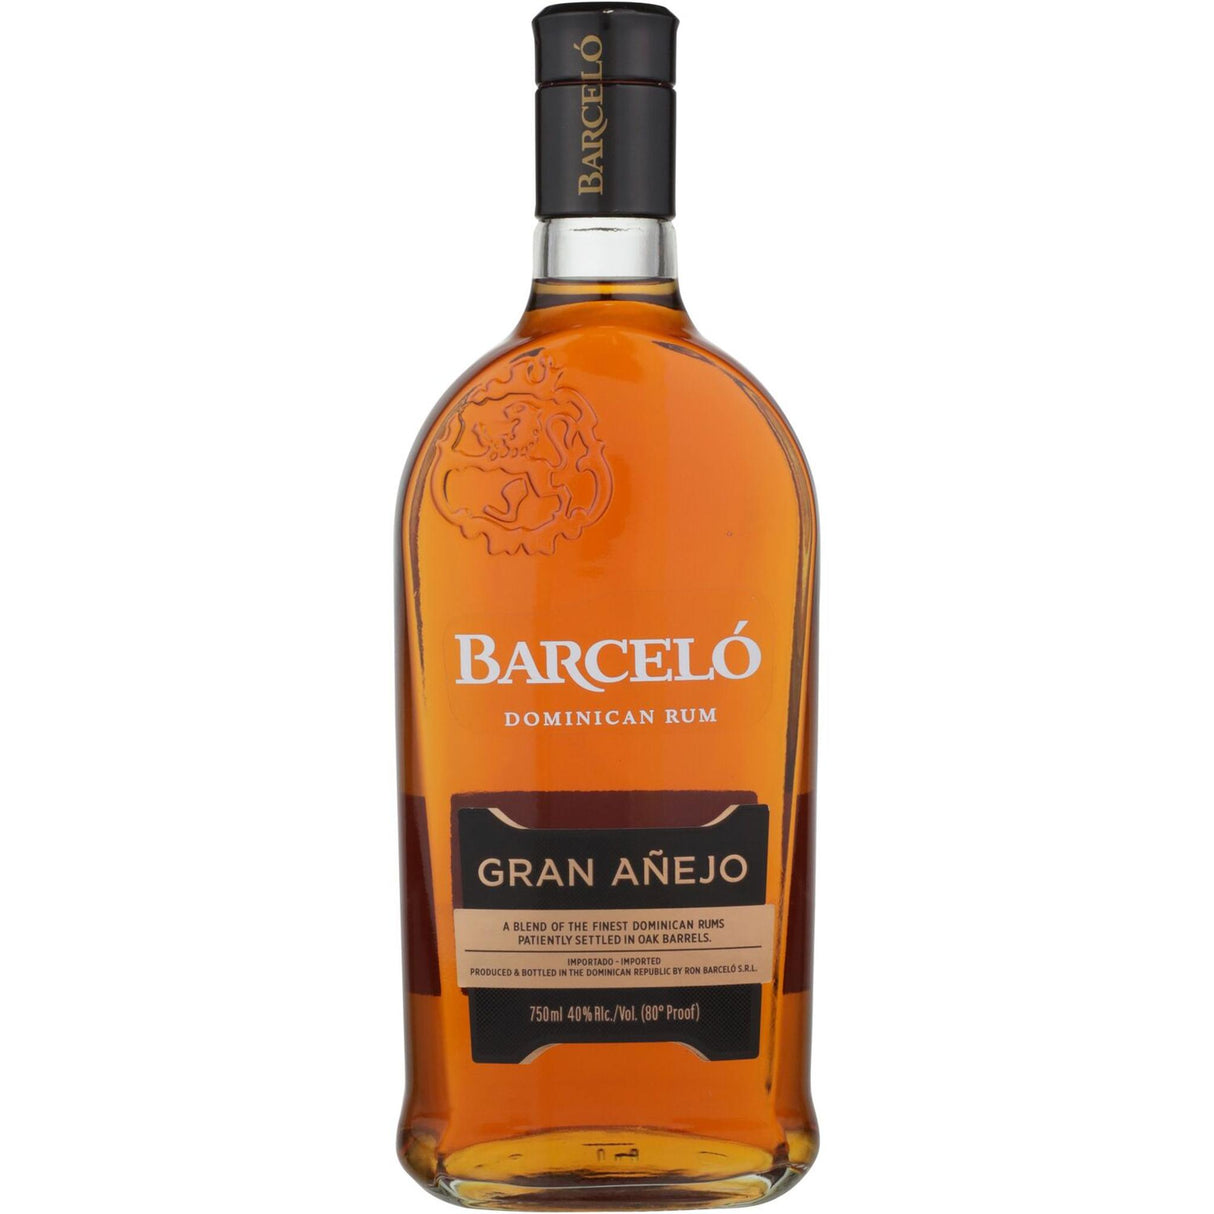 Ron Barcelo Aged Rum - Liquor Geeks